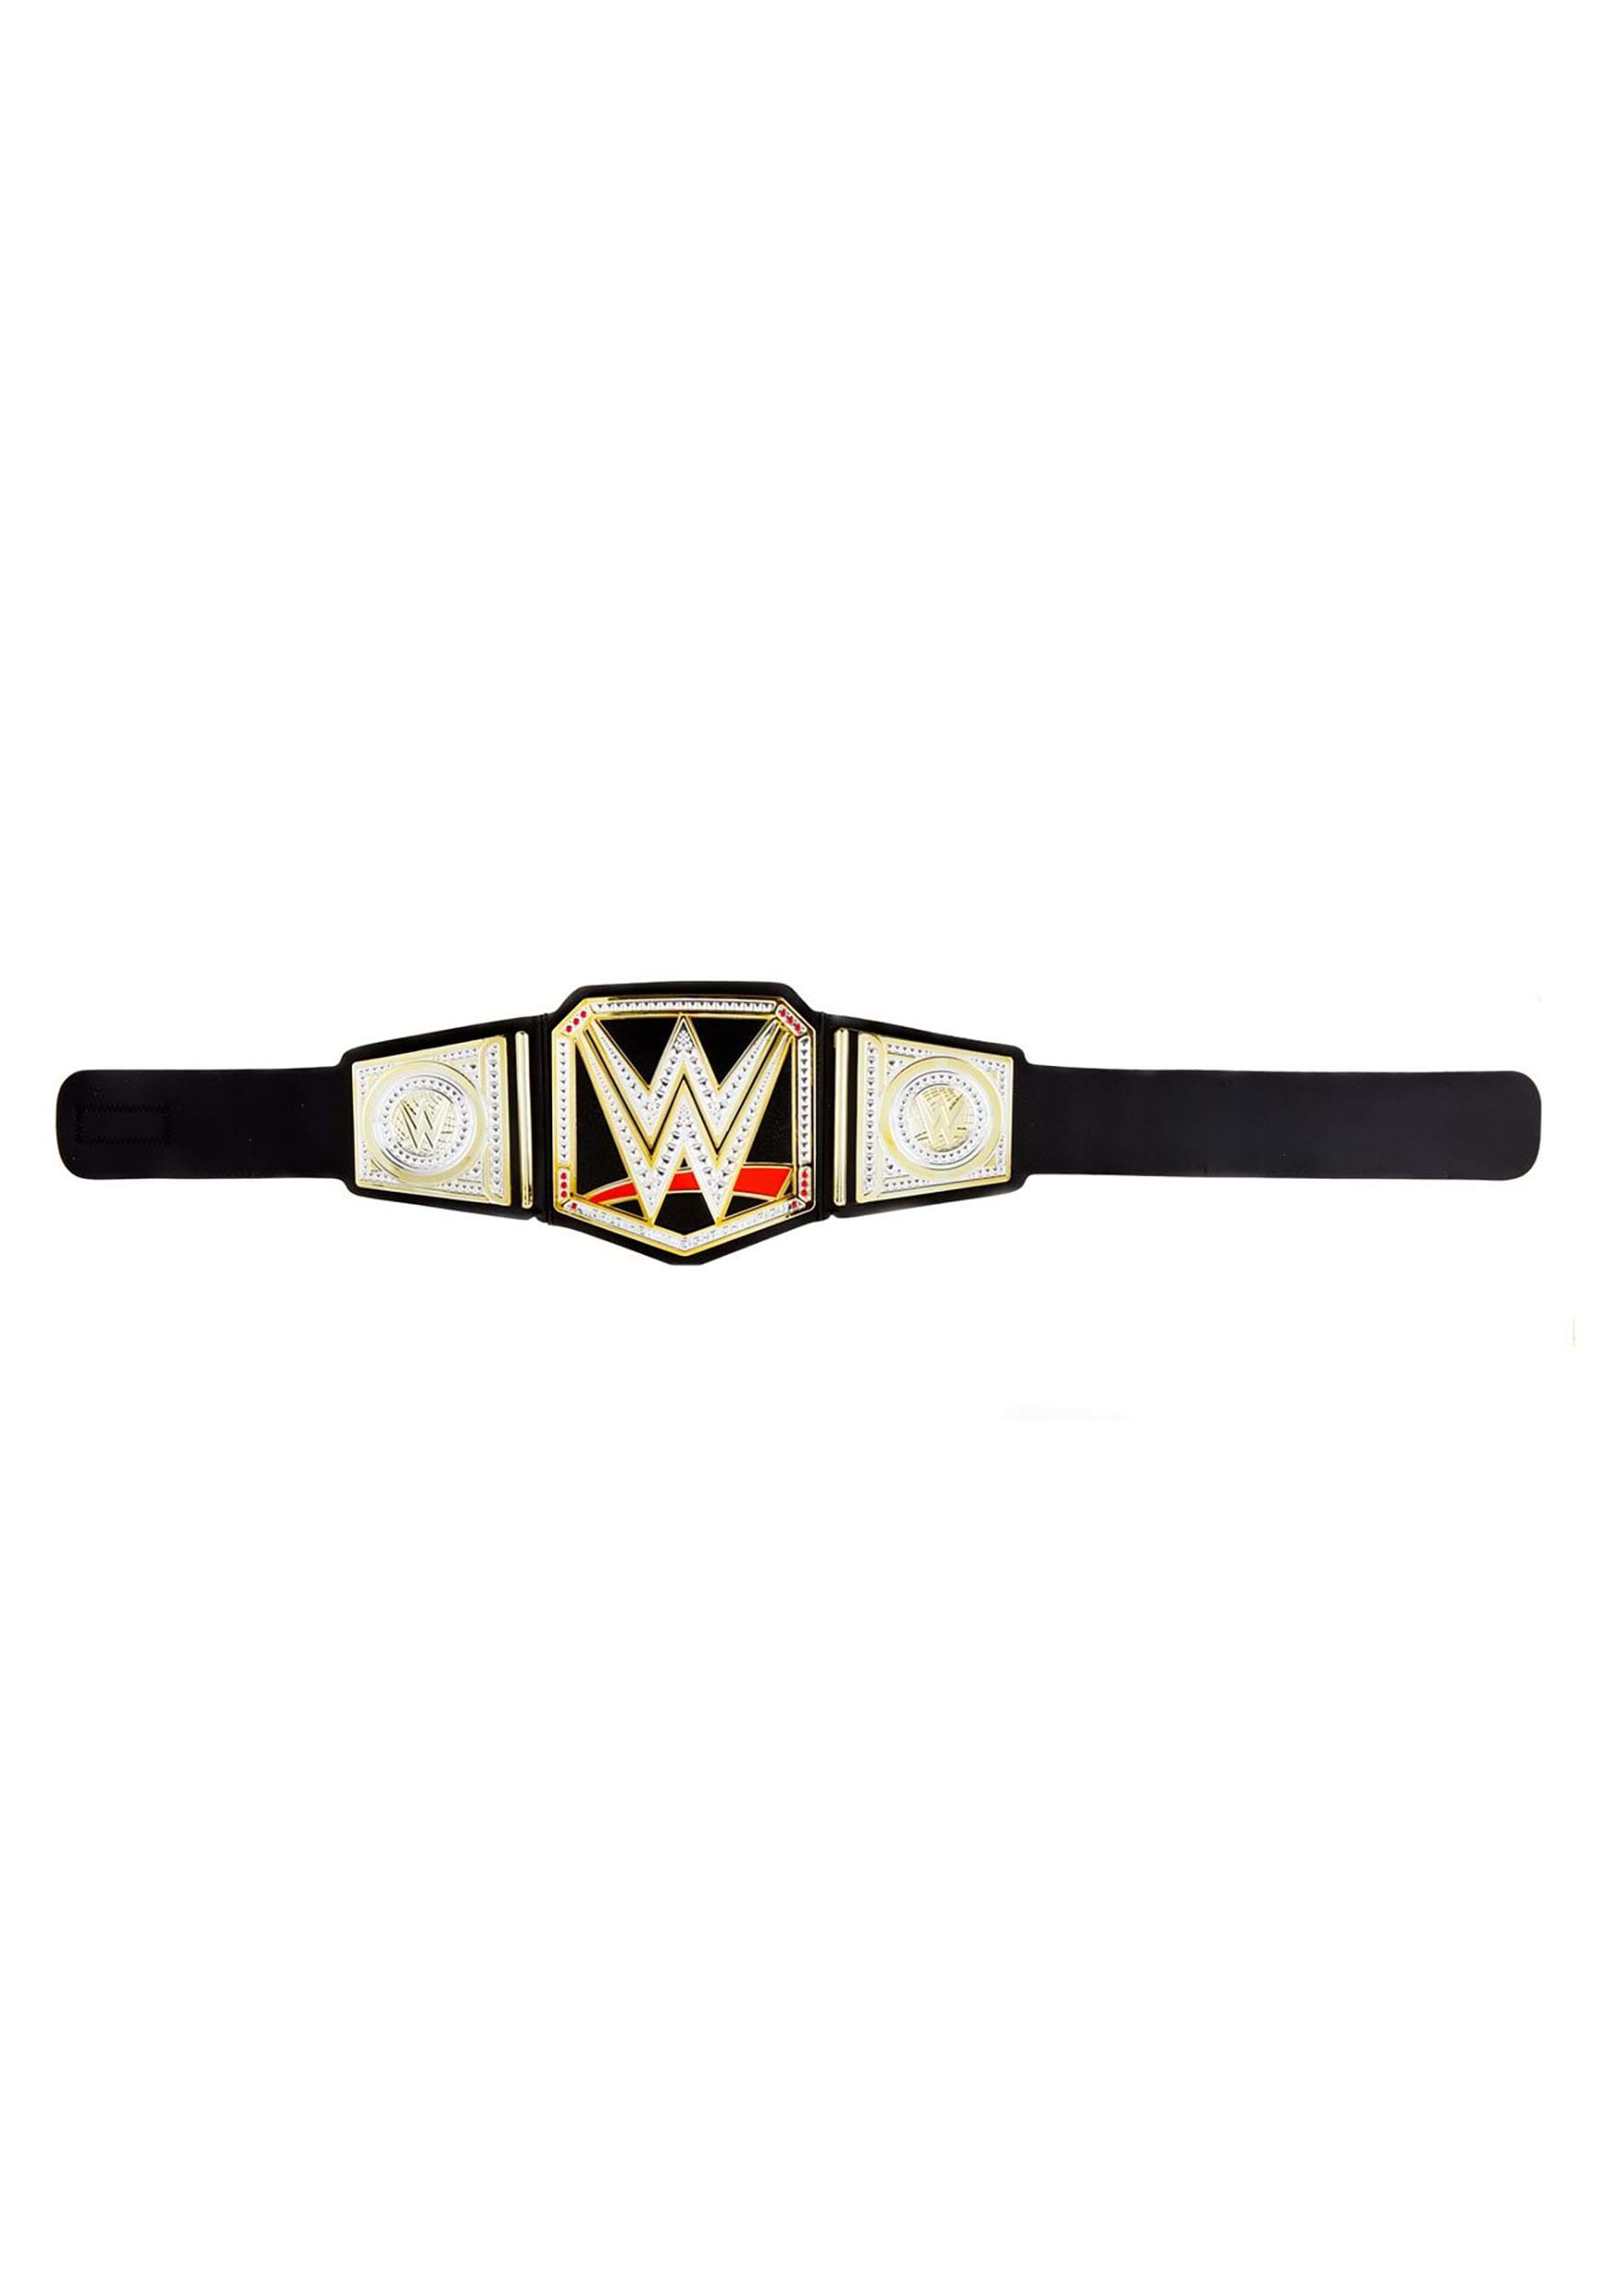 Roleplay WWE Championship Belt Accessory , WWE Belts